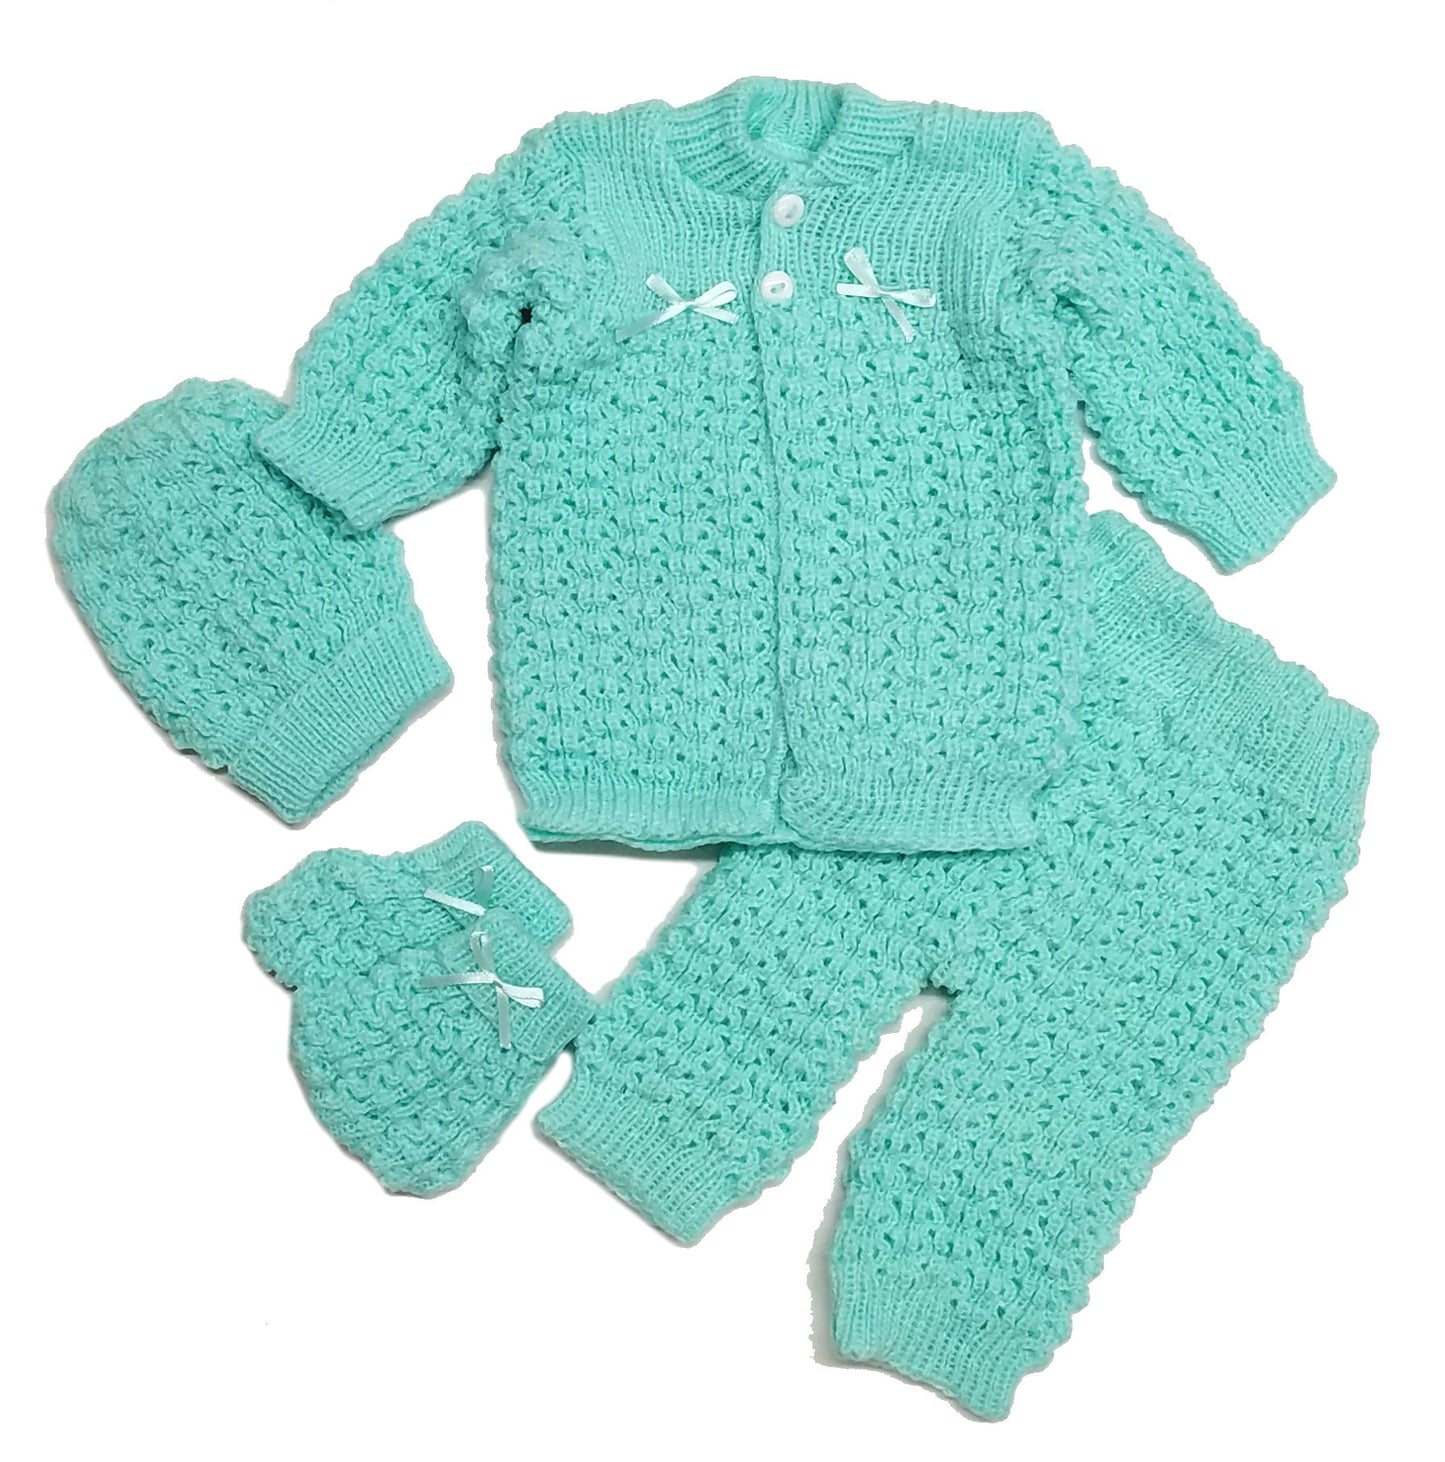 Wholesale Newborn Crochet Girl Pink Hat Cardigan Sweater Pants Booties 4 Piece Outfit Set